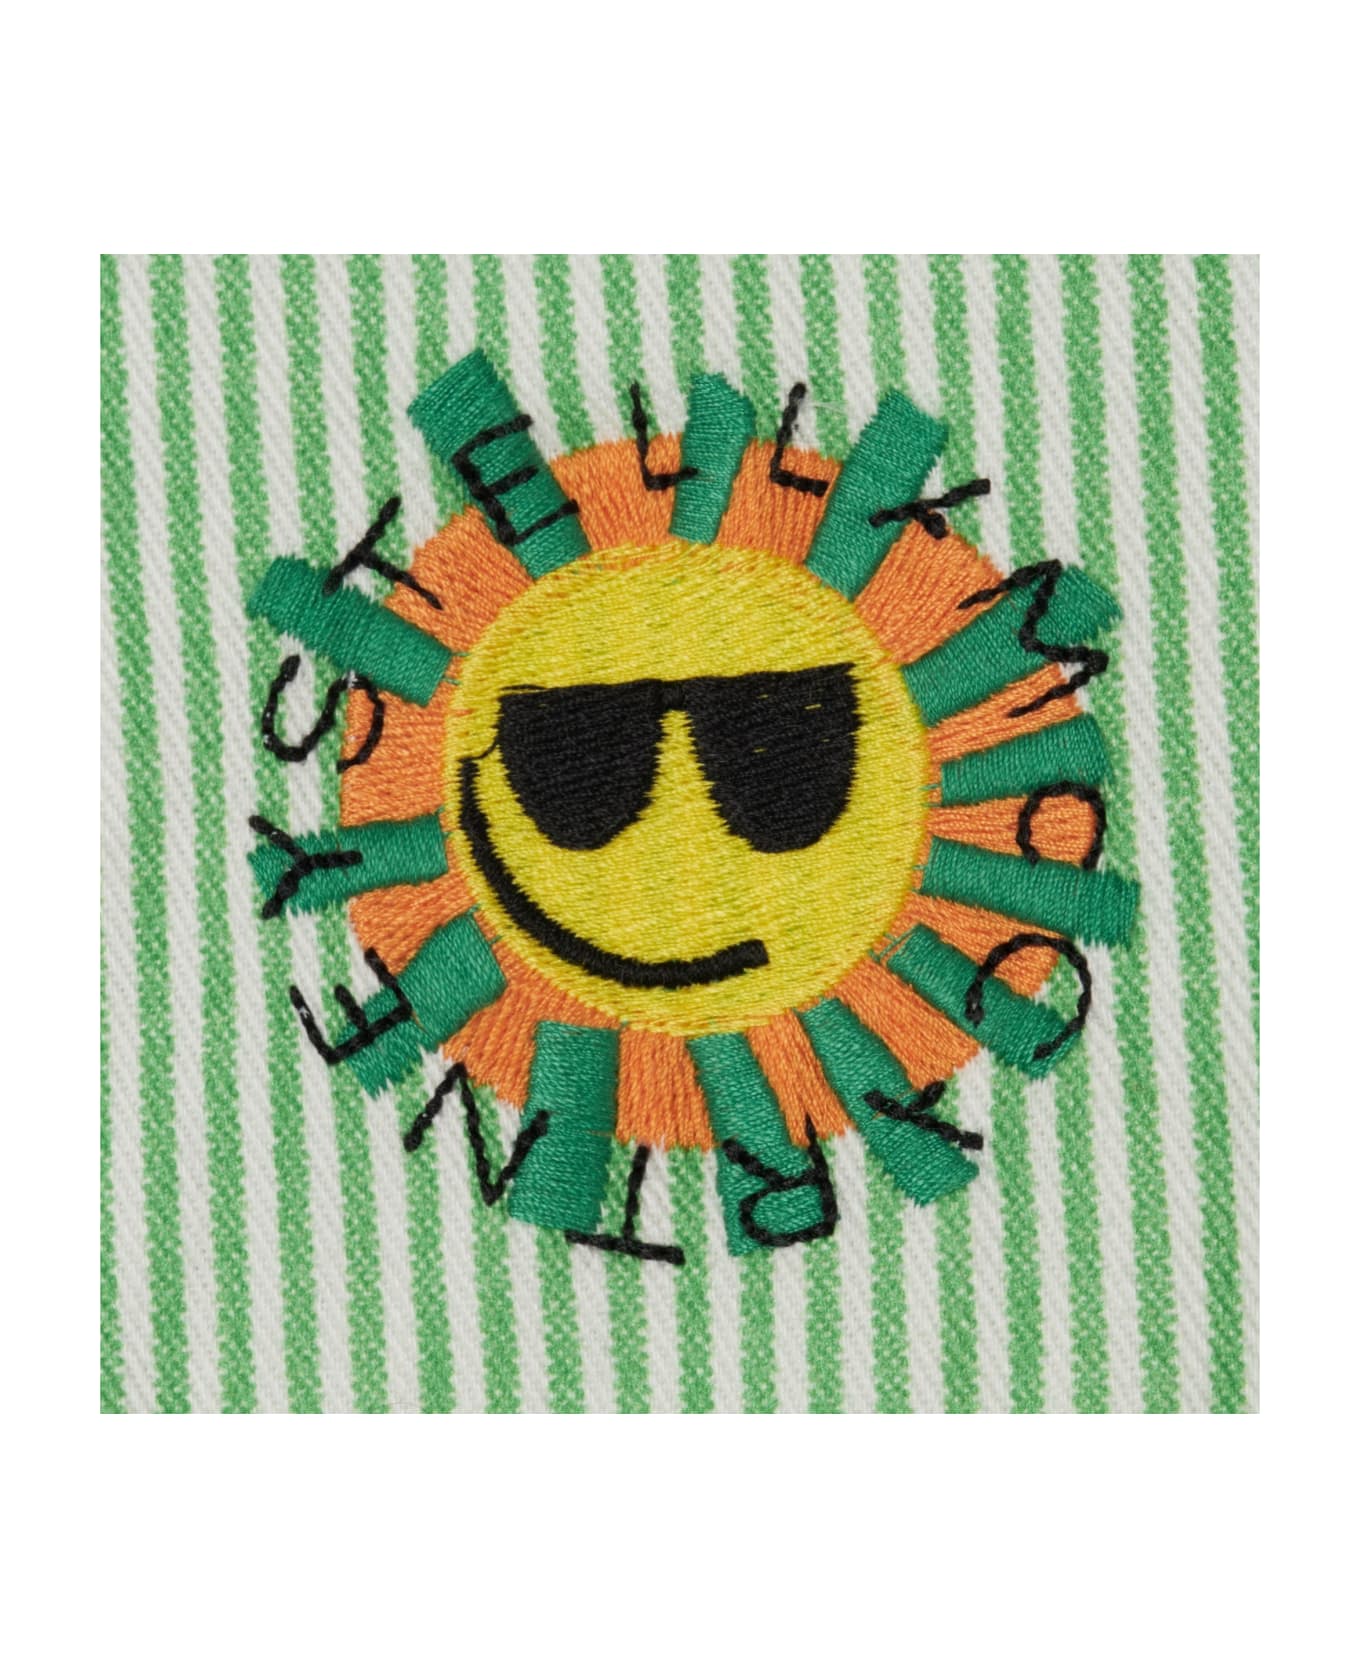 Stella McCartney Kids Sunshine Striped Shorts - White ボトムス